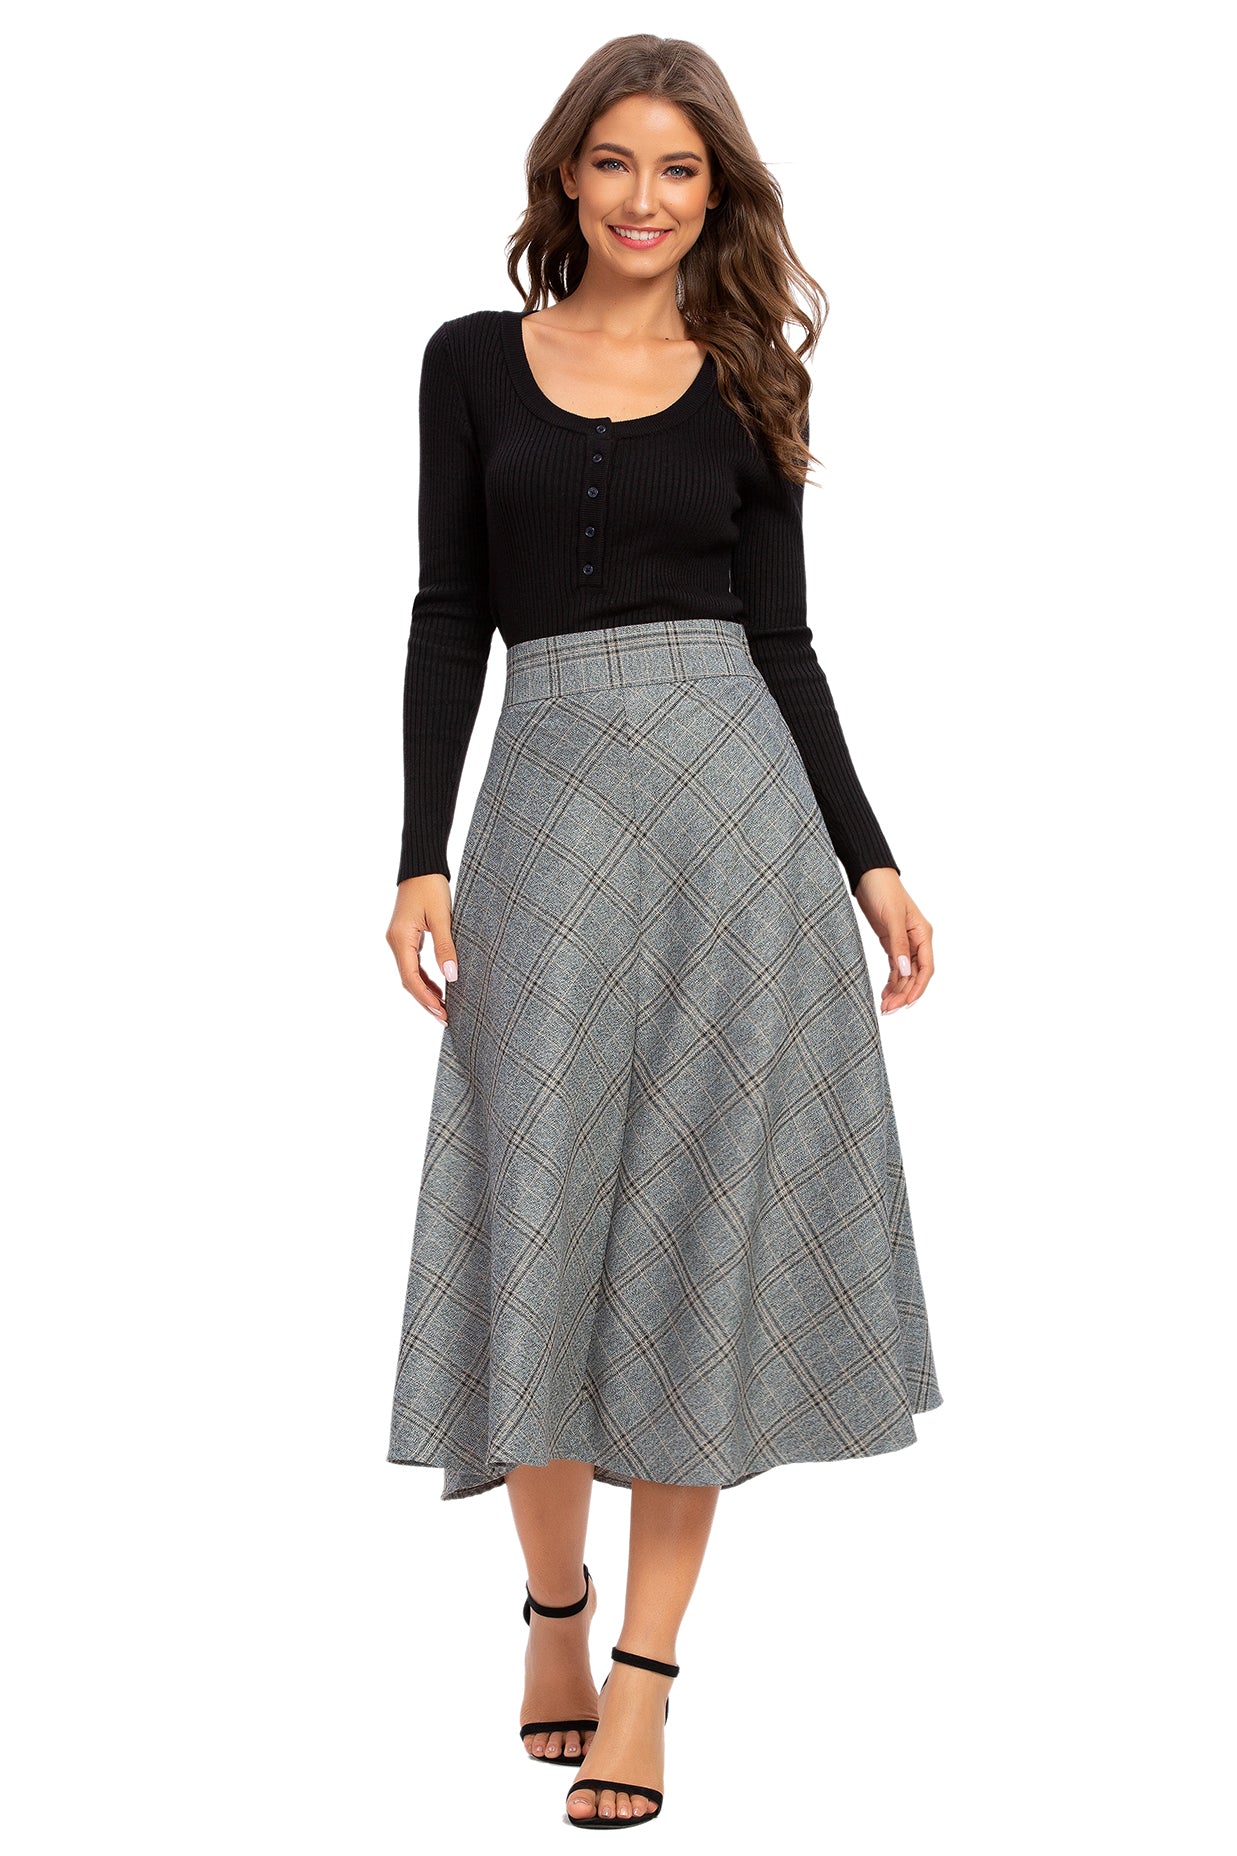 Womens High Waist Plaid Midi Skirt Grey